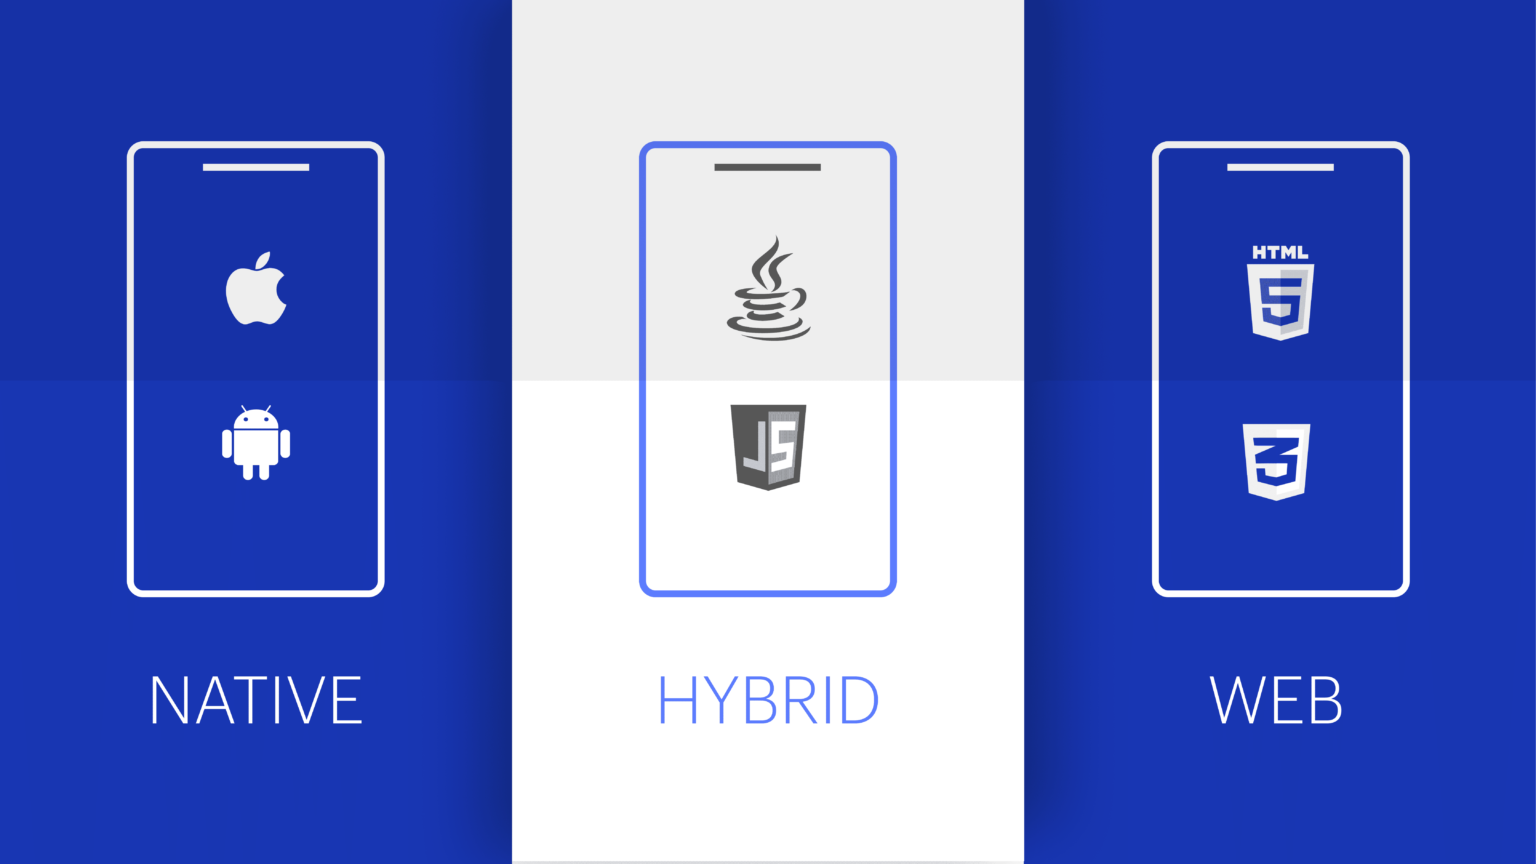 Native vs hybrid vs web - feature